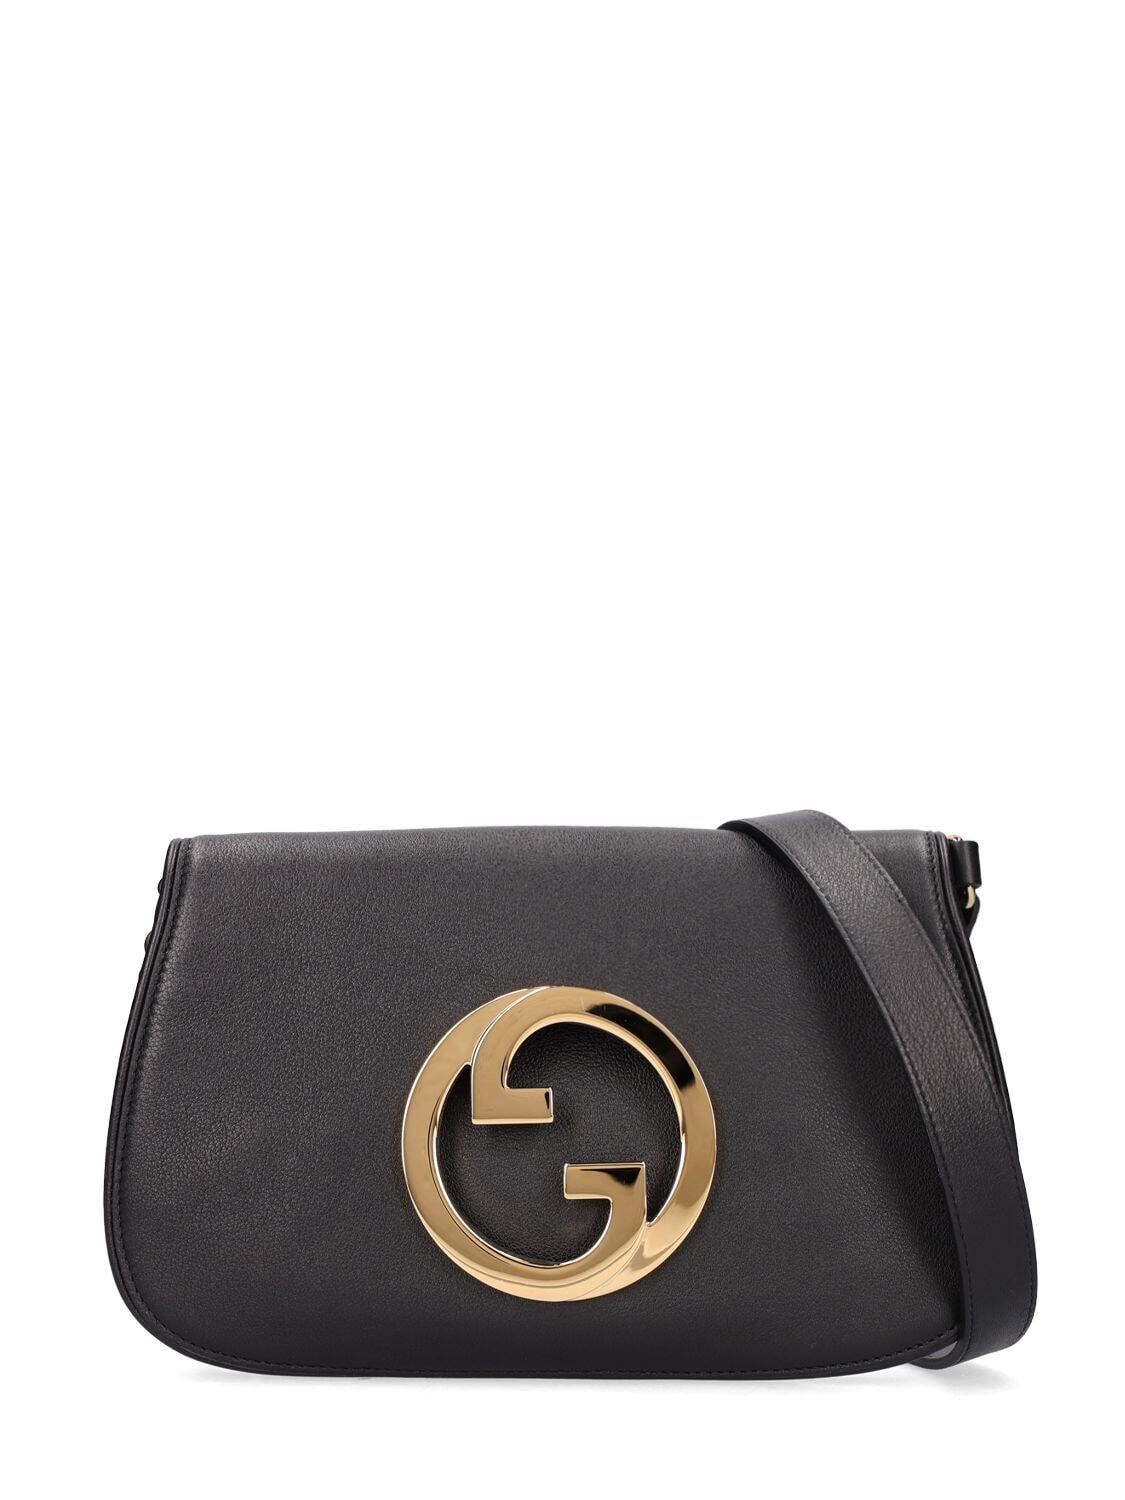 GUCCI Blondie Leather Shoulder Bag in black